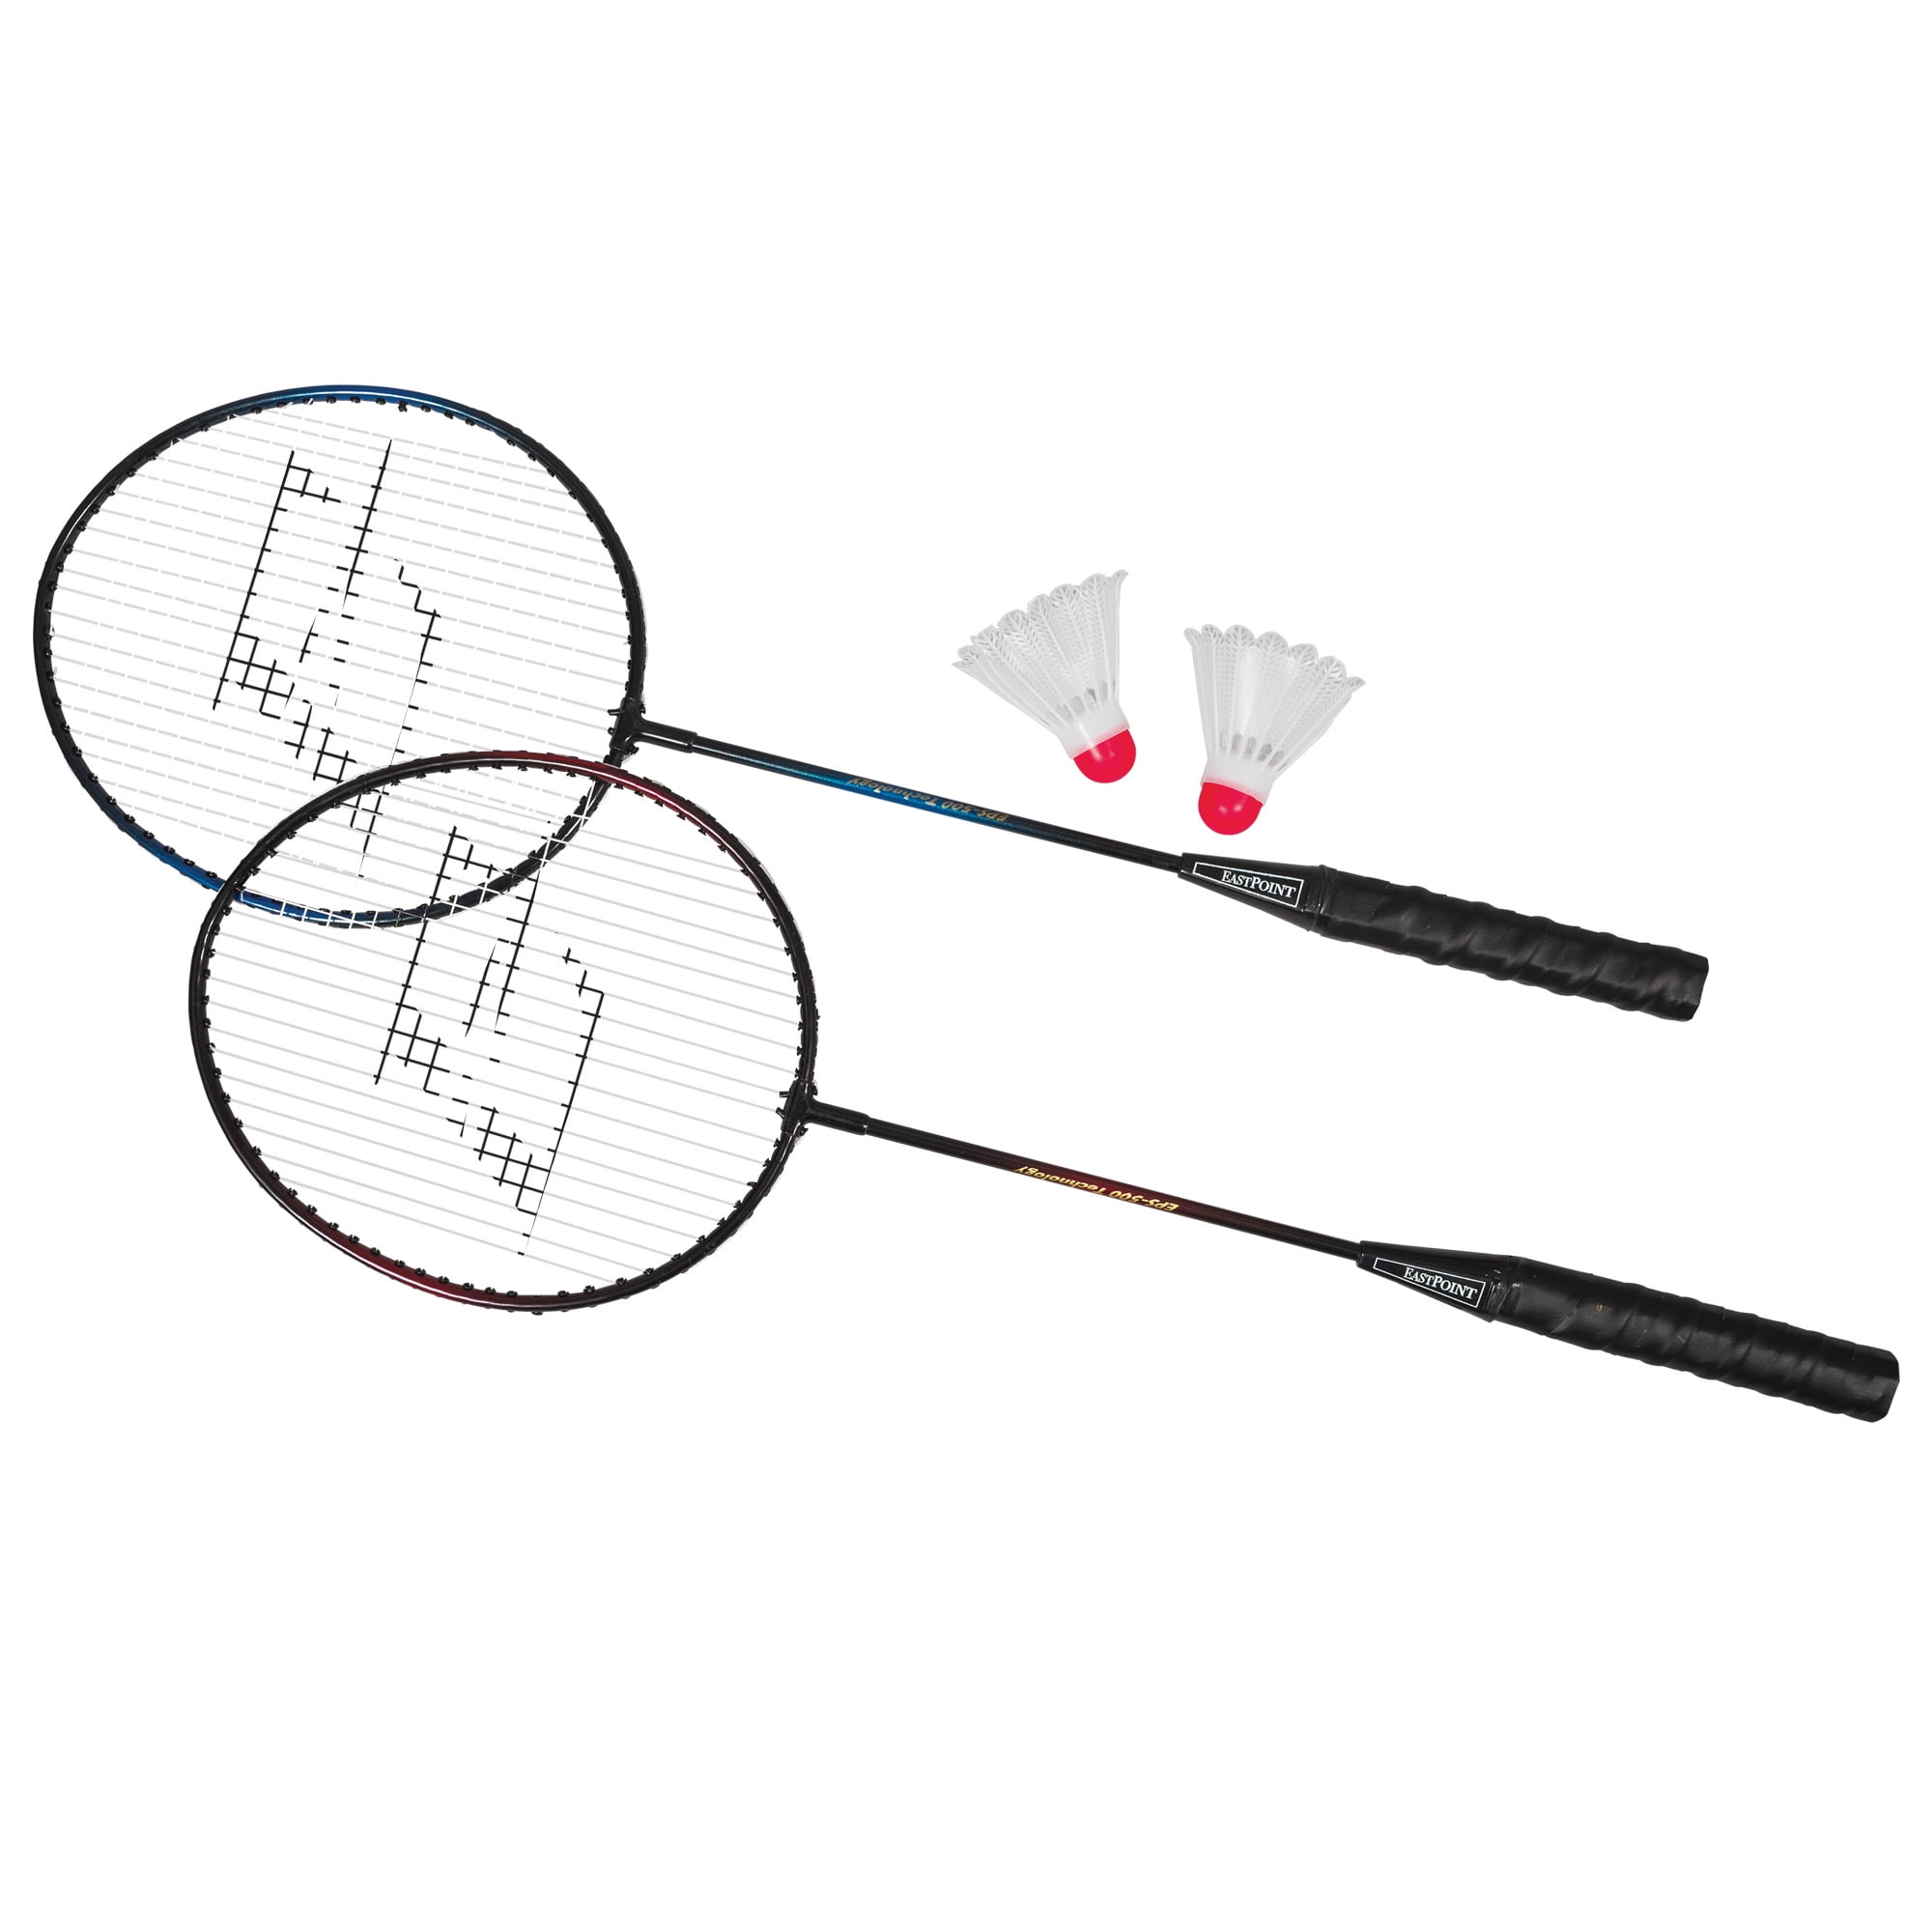 KAWASAKI 2 Player Badminton Set With 3 Feather Shuttlecocks Racquet And Bag 